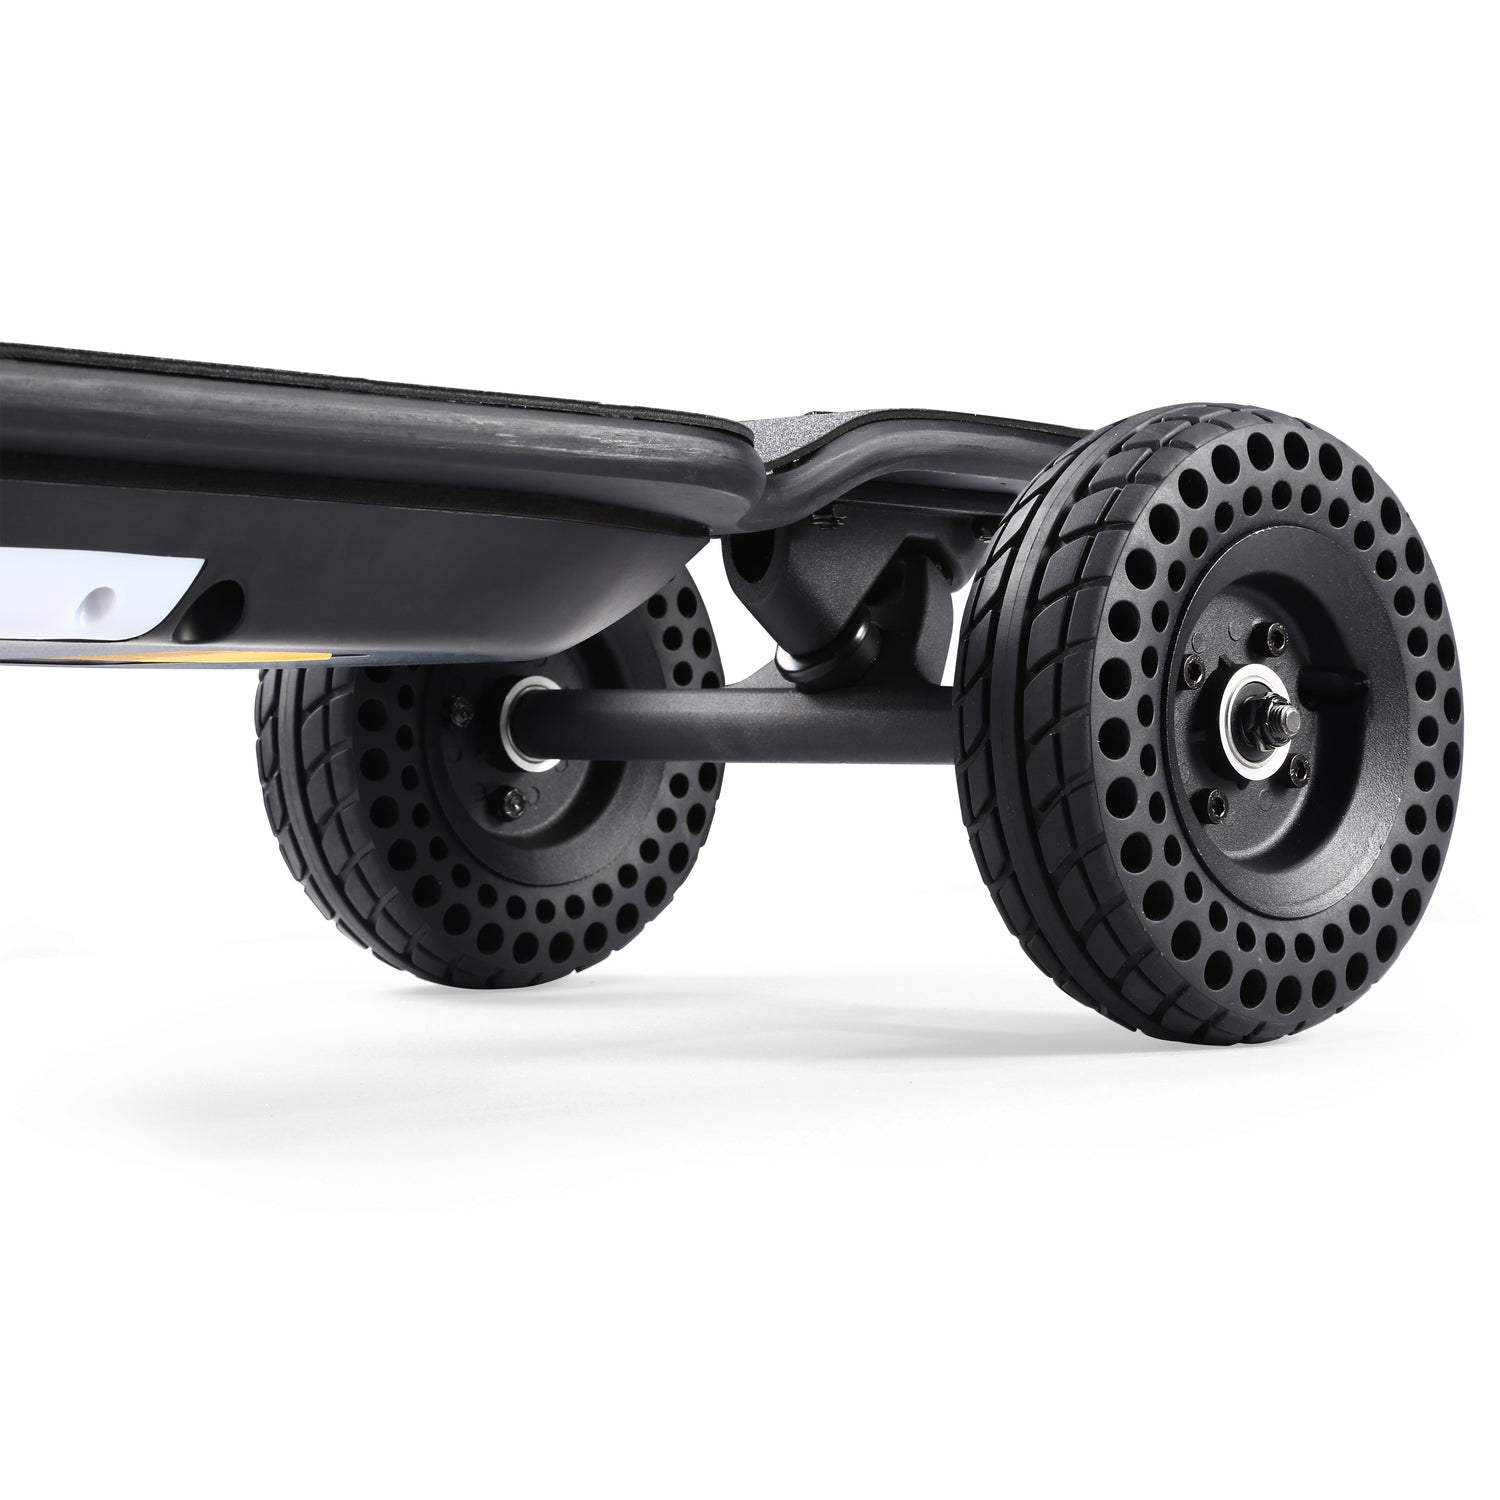 Electric Skateboard, Electric Longboard, E- Skateboard, off-road electric skateboard, all-terrain electric skateboard